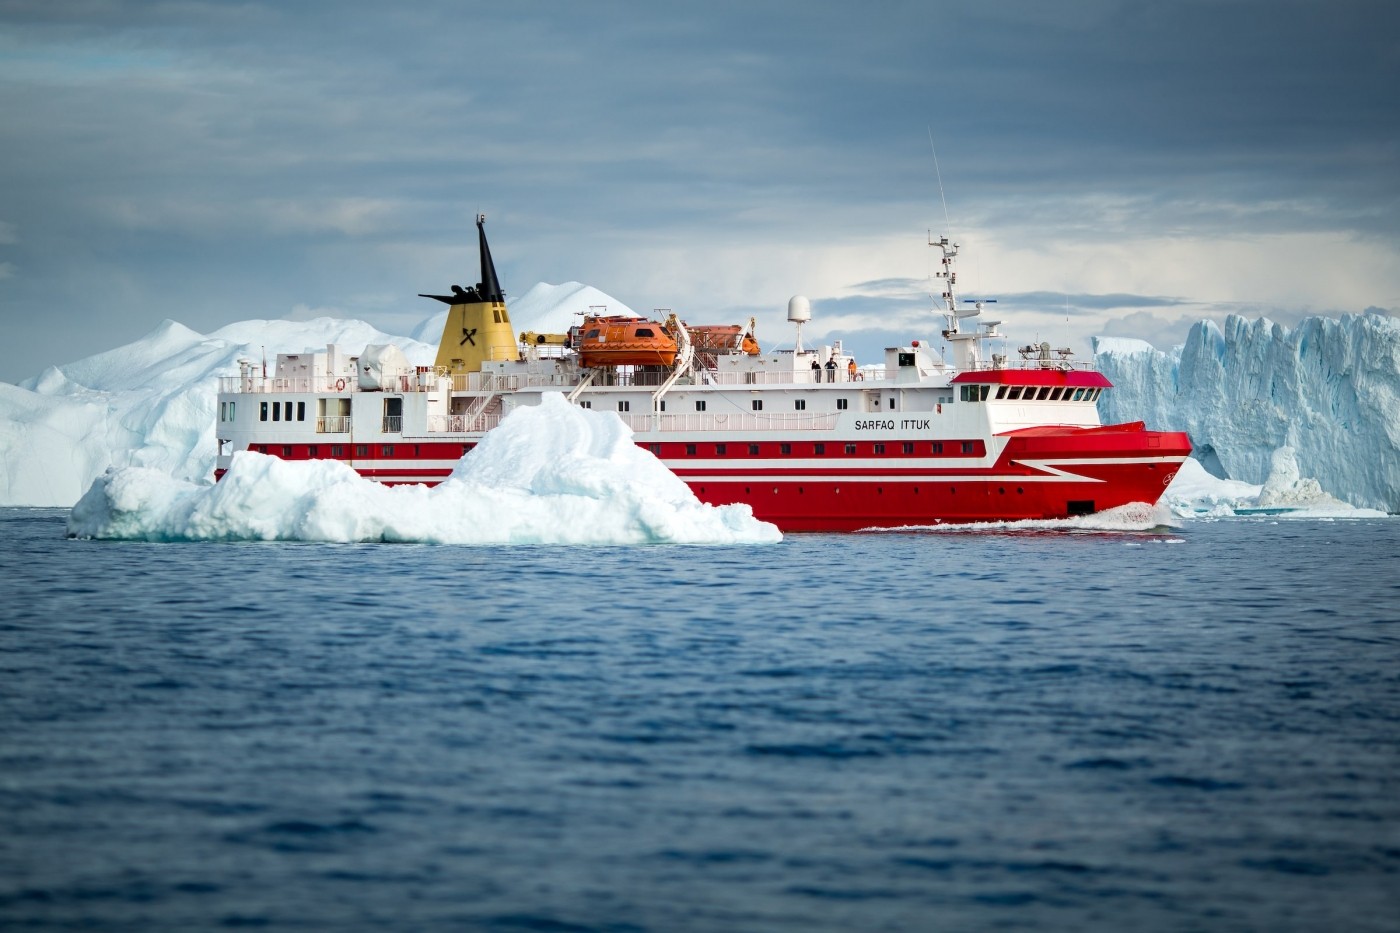 Sarfaq Ittuk, Greenland's passenger ferry, cruising along the edge of the Ilulissat ice fjord. By Mads Pihl